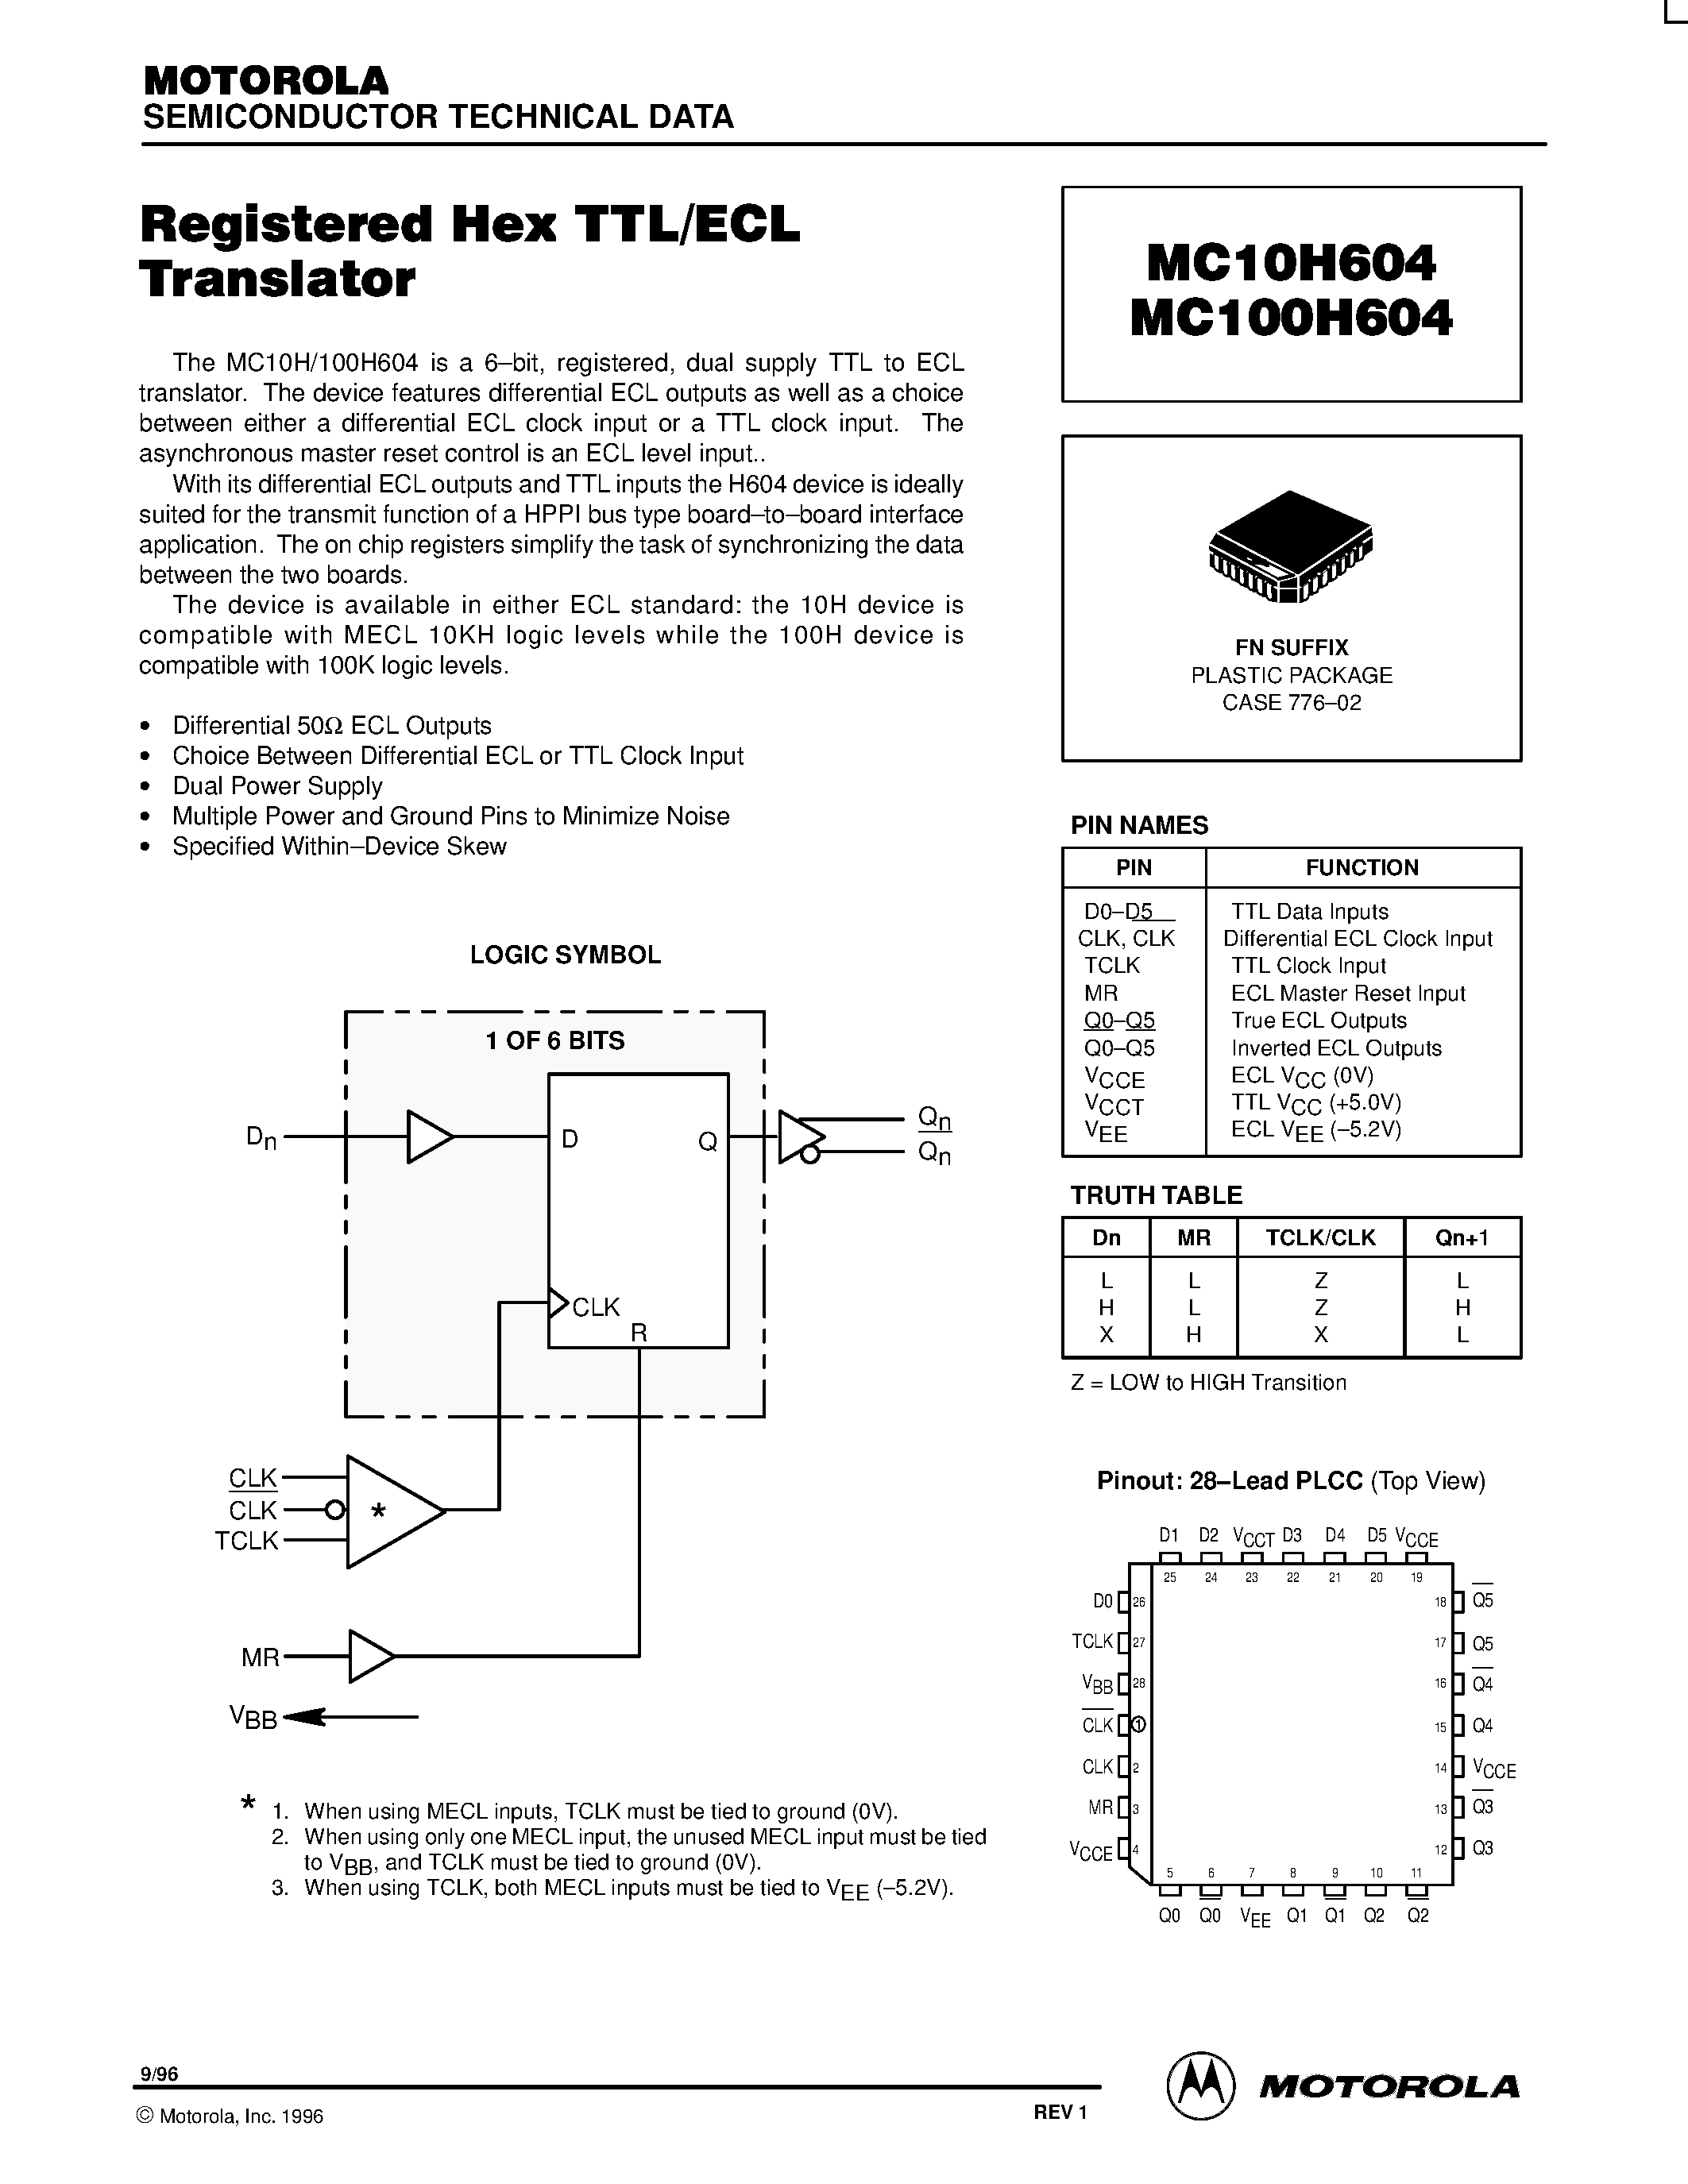 Datasheet MC10H604FN - Registered Hex TTL/ECL Translator page 1